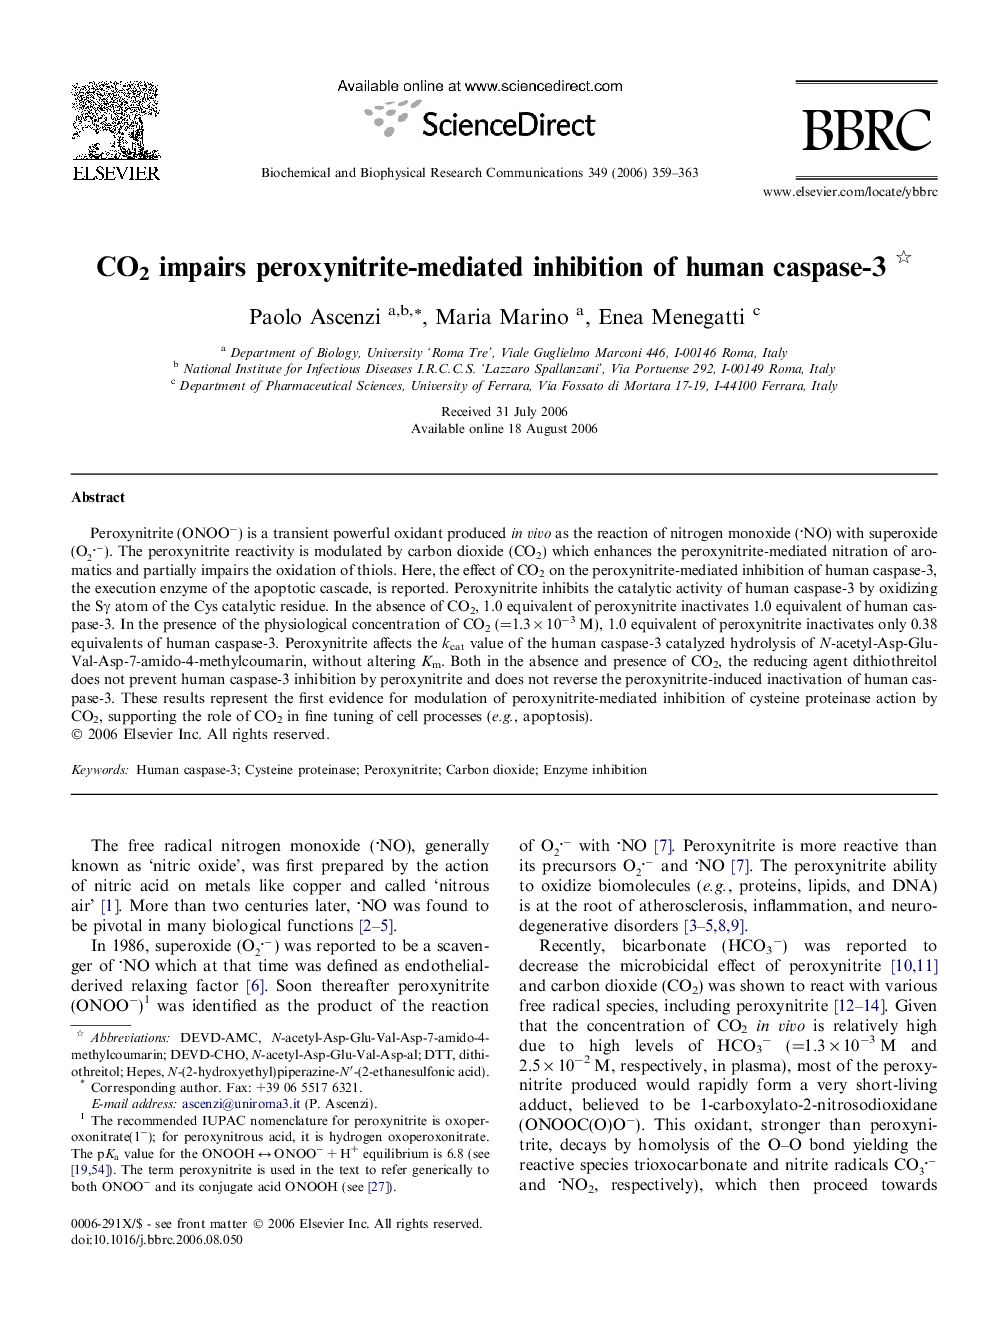 CO2 impairs peroxynitrite-mediated inhibition of human caspase-3 